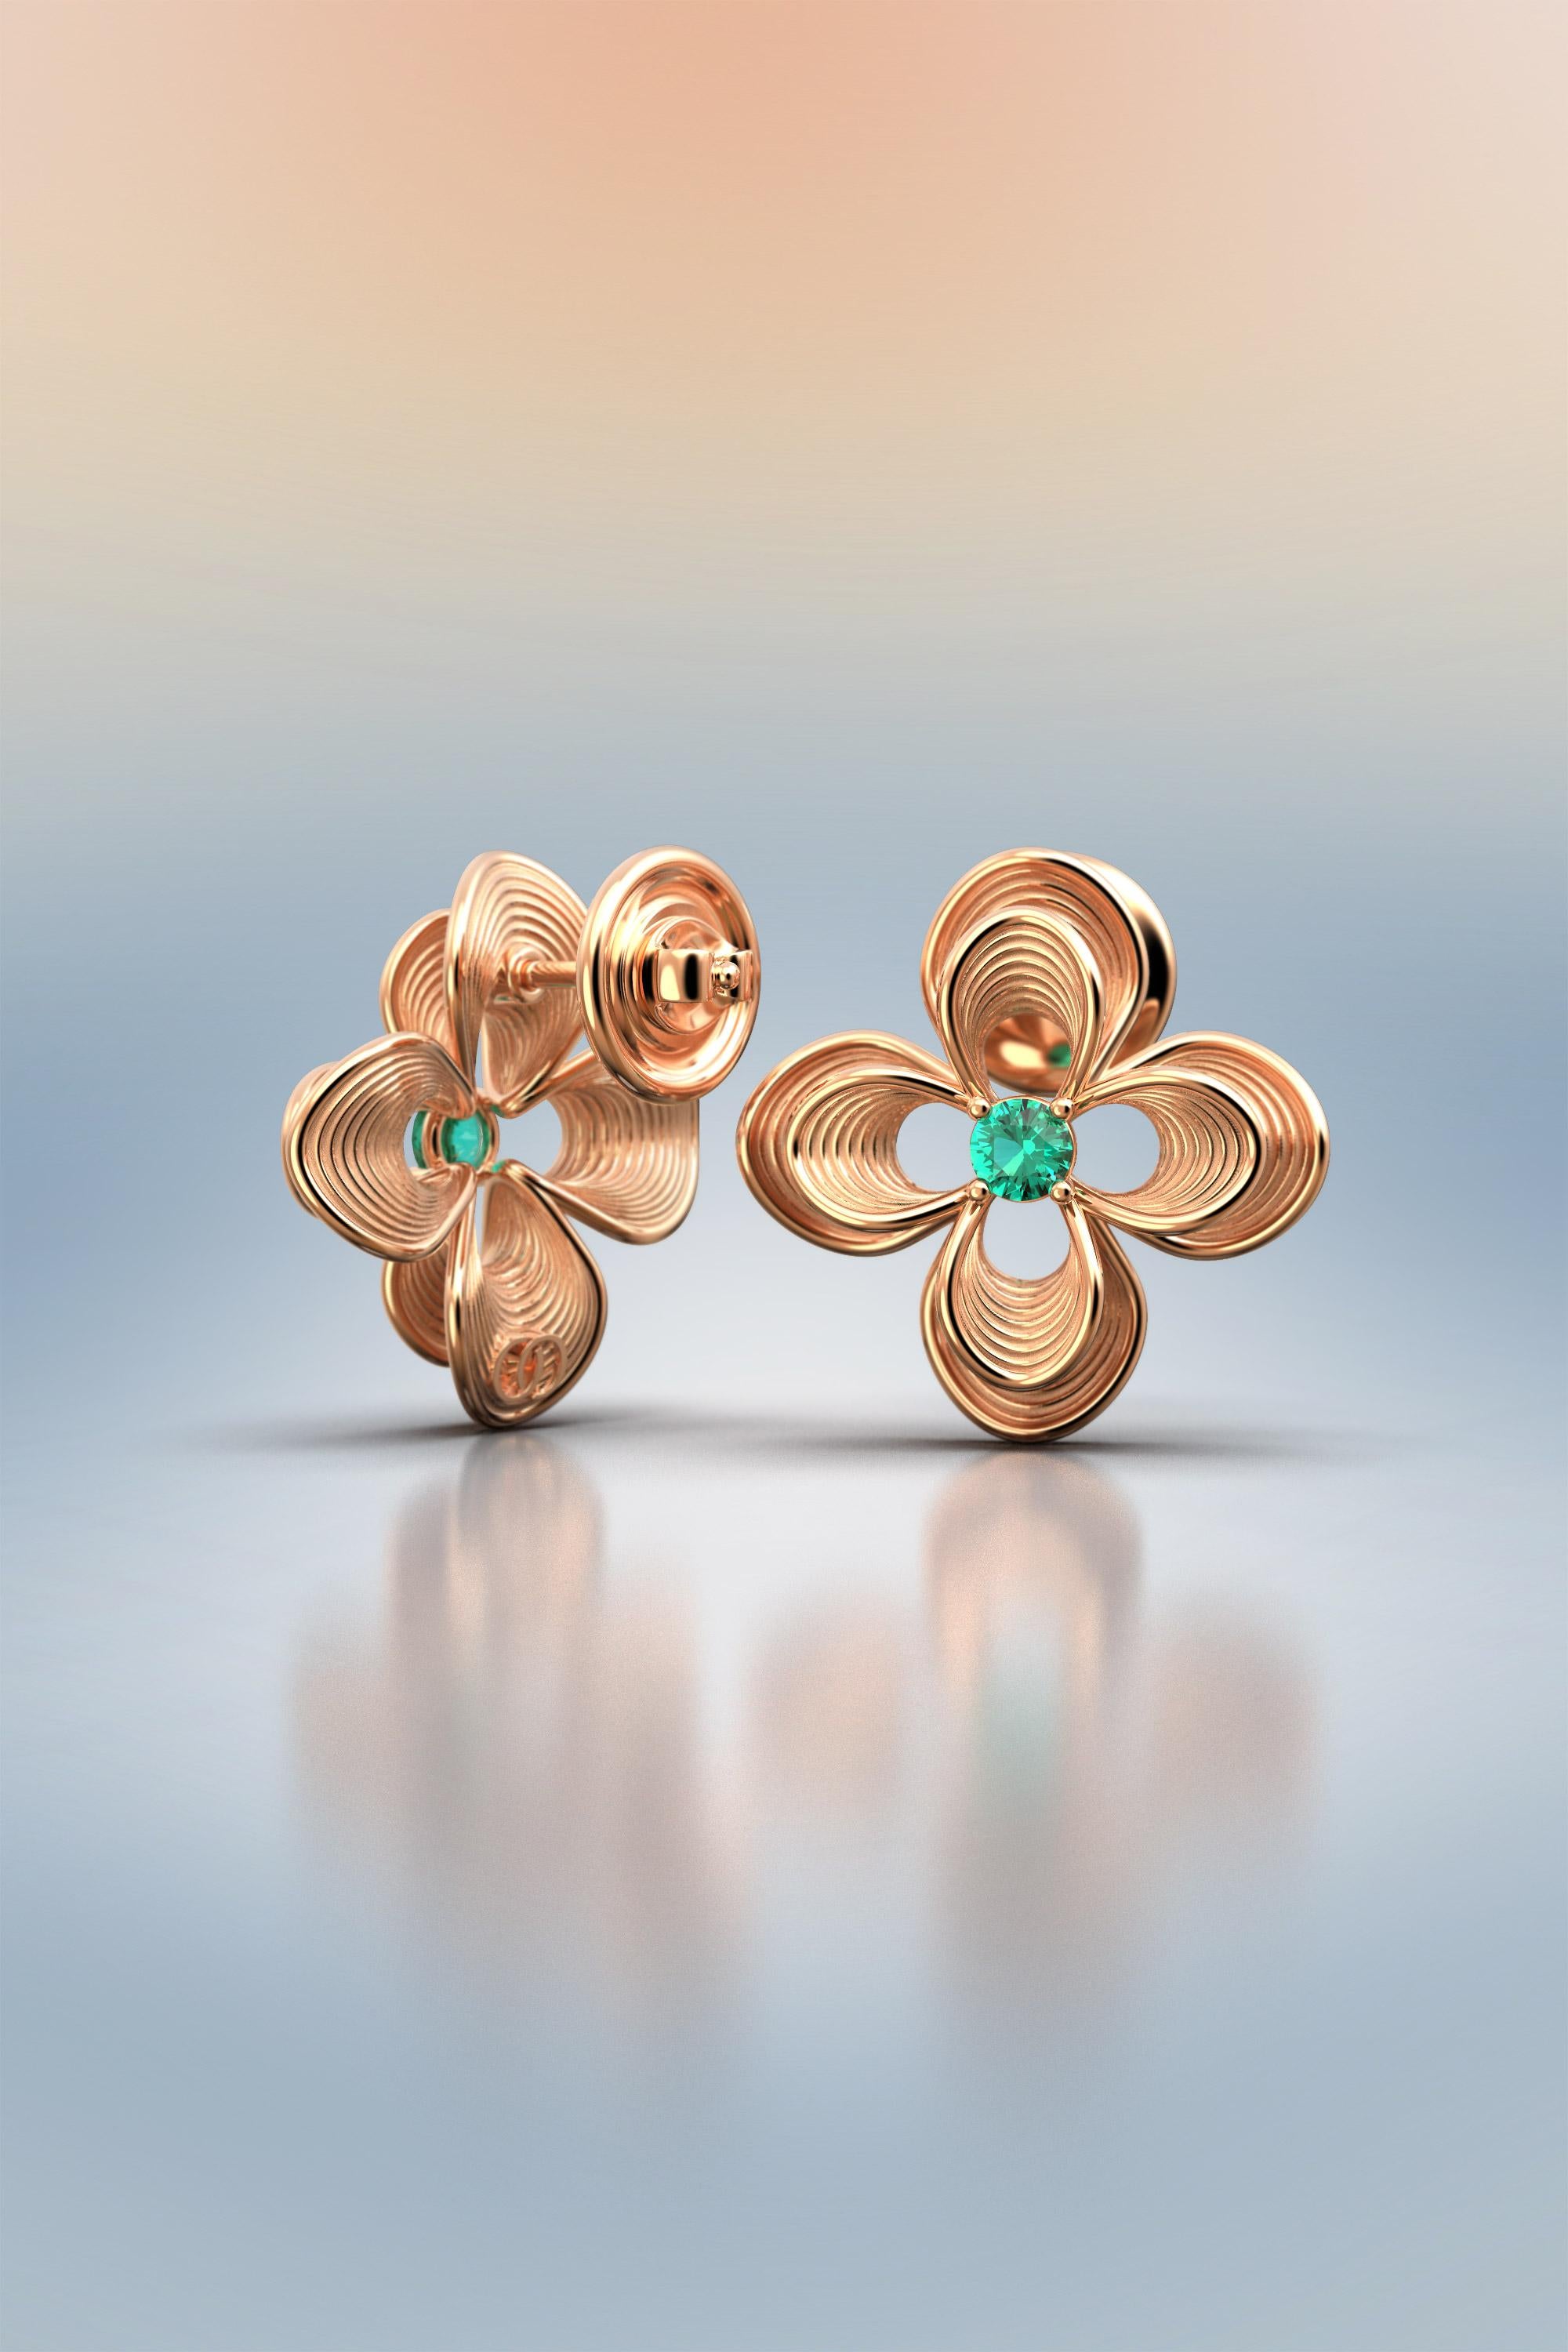 Emerald Stud Earrings in 18k Italian Gold by Oltremare Gioielli For Sale 4